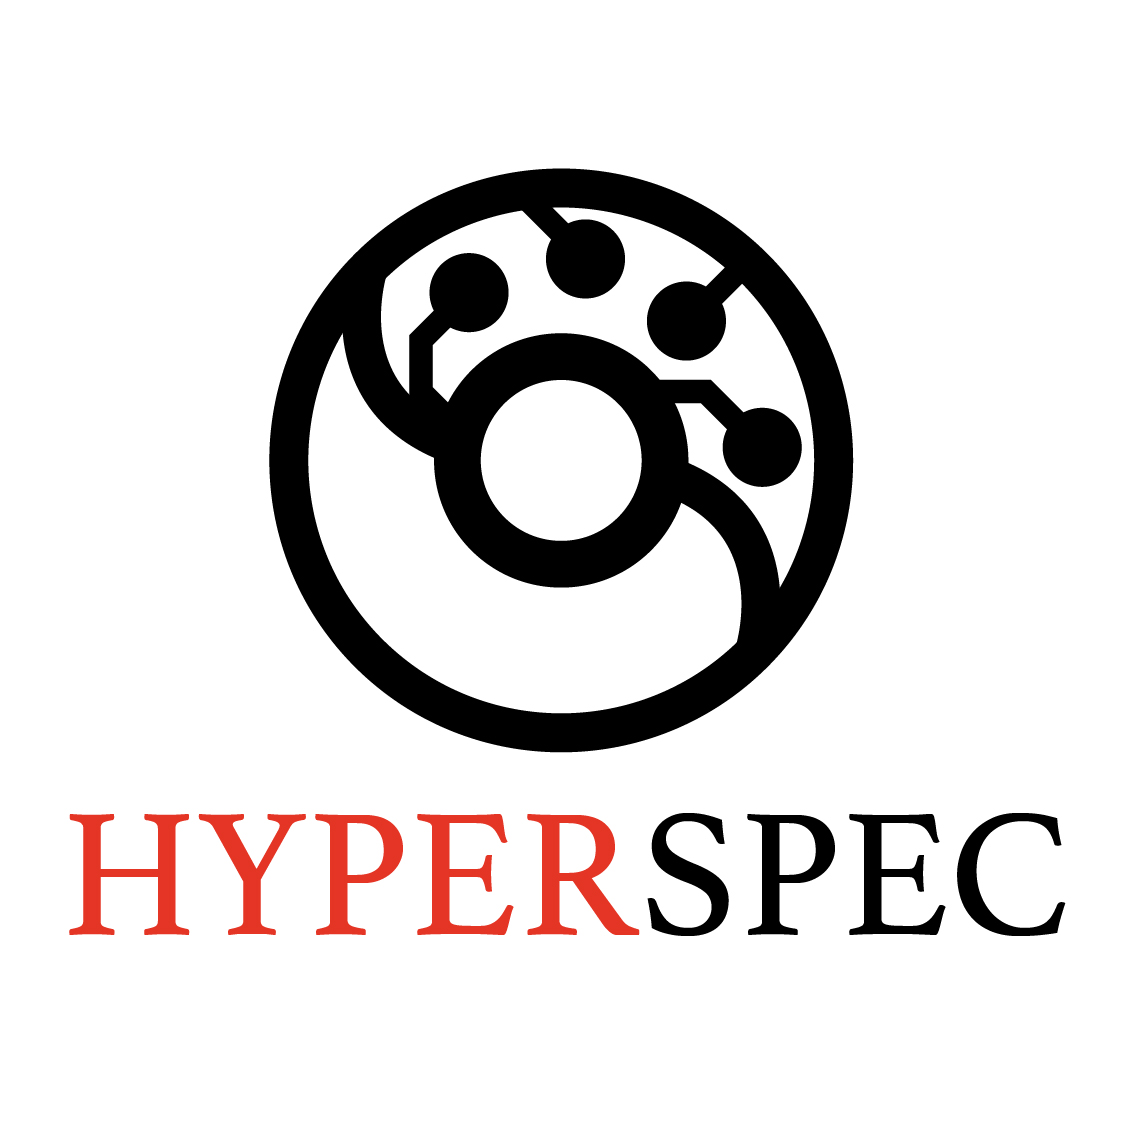 Hyperspec Logo White Background